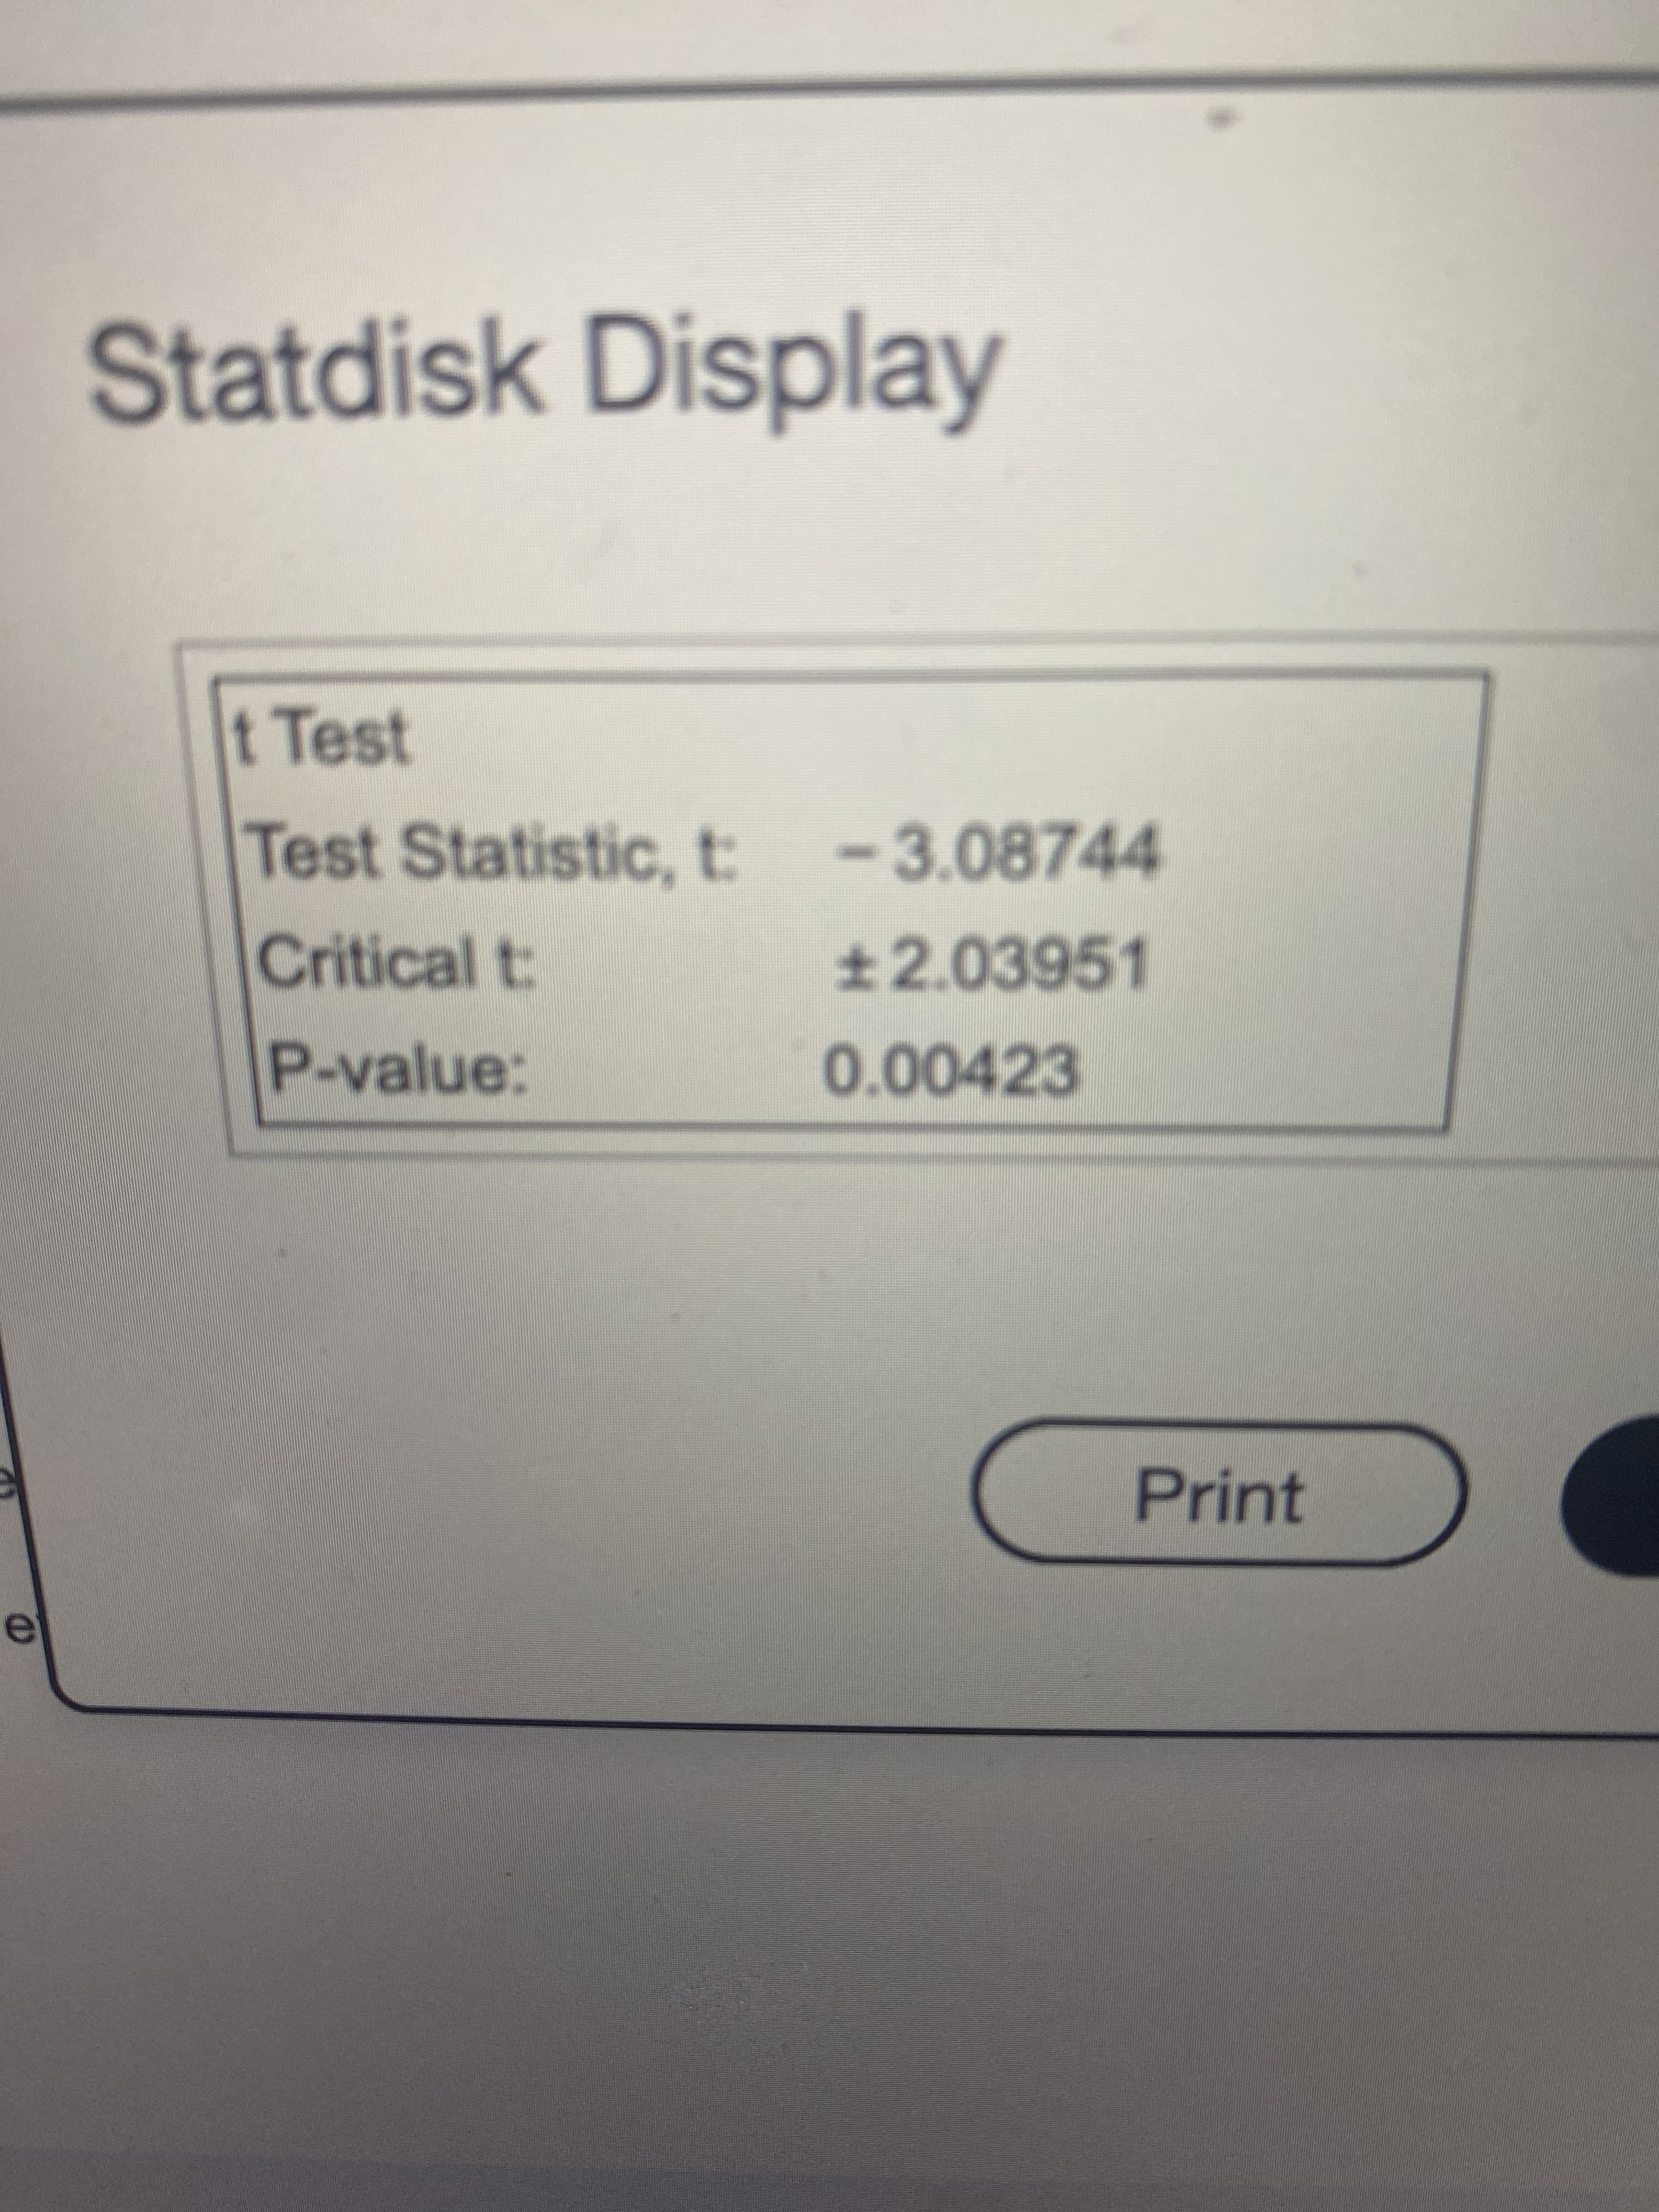 Statdisk Display
t Test
Test Statistic, t -3.08744
Critical t:
±2.03951
P-value:
0.00423
Print
